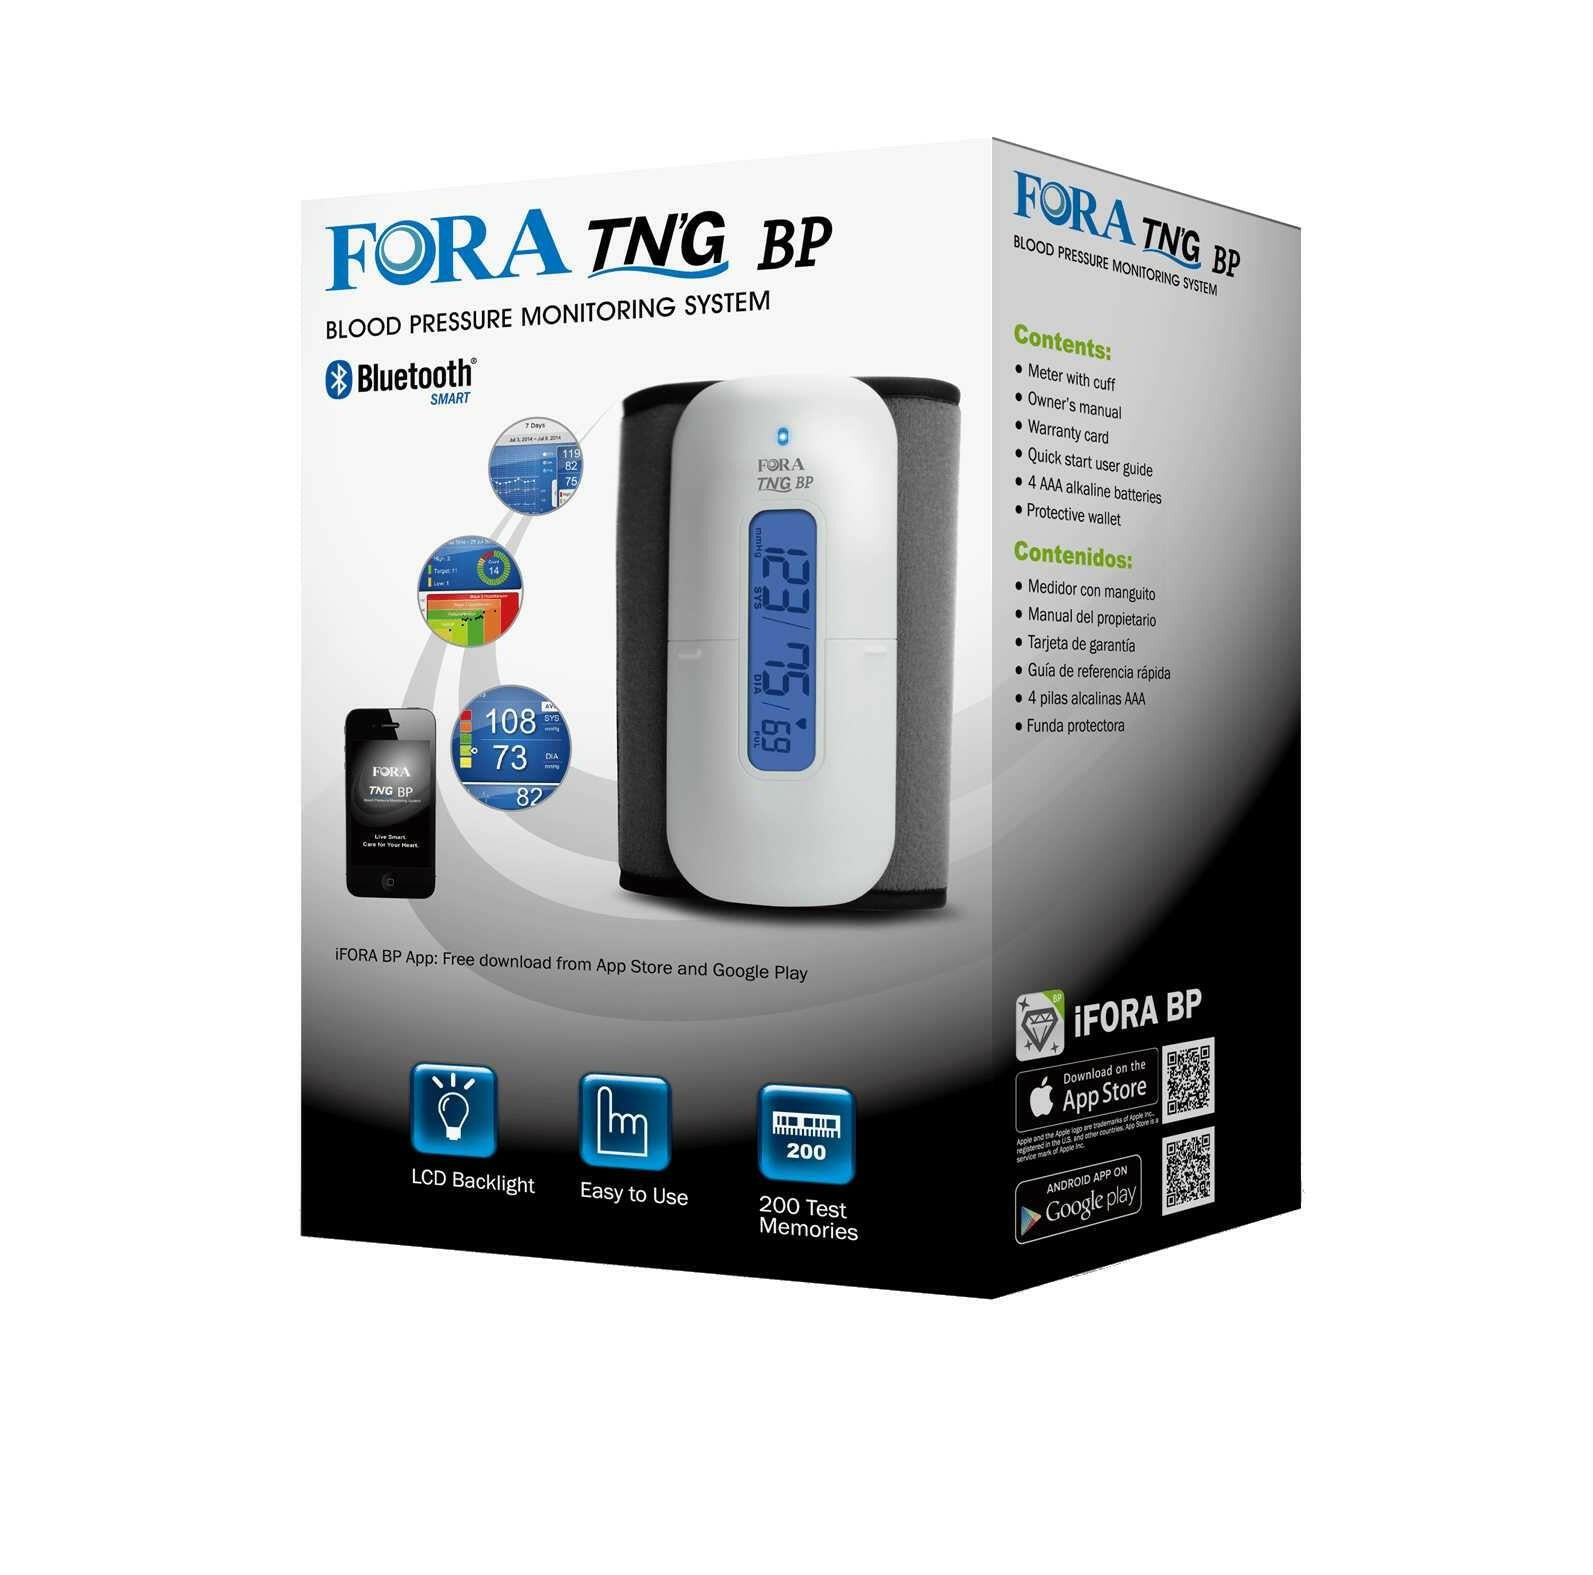 FORA Test N'GO P80 Wireless Bluetooth Upper Arm Blood Pressure Monitor (Cuff Range 9.4